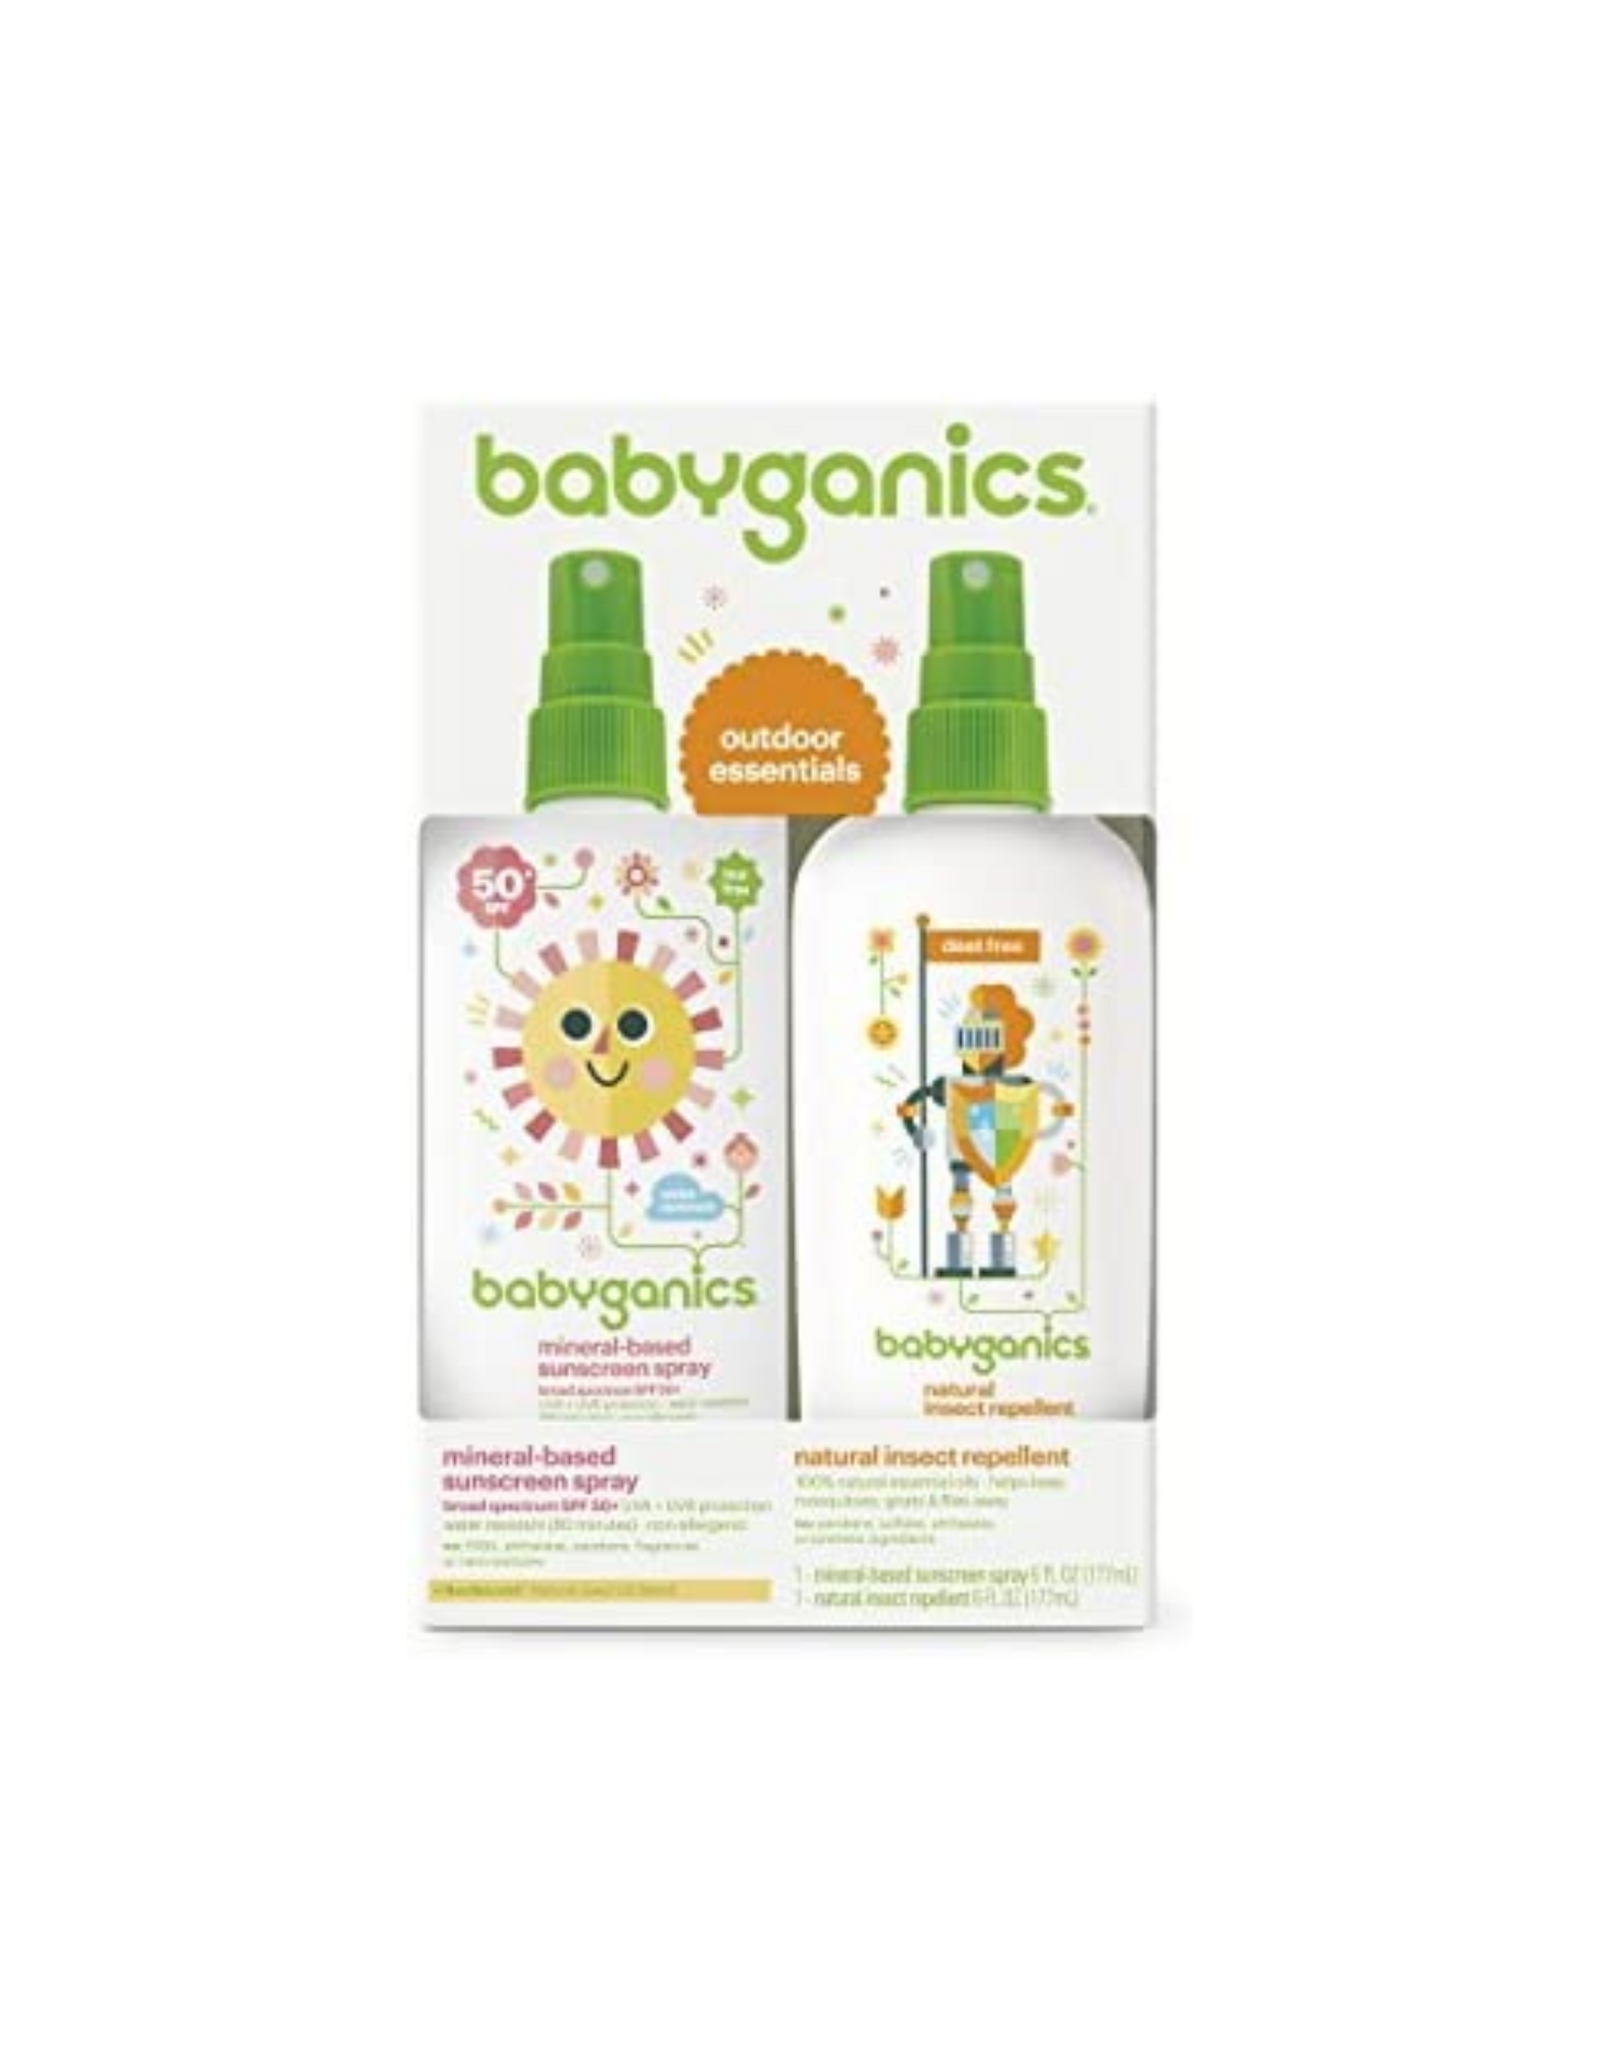 Babyganics 50 SPF Baby Sunscreen Spray and Bug Spray, 6oz each, Combo (2 Pack)